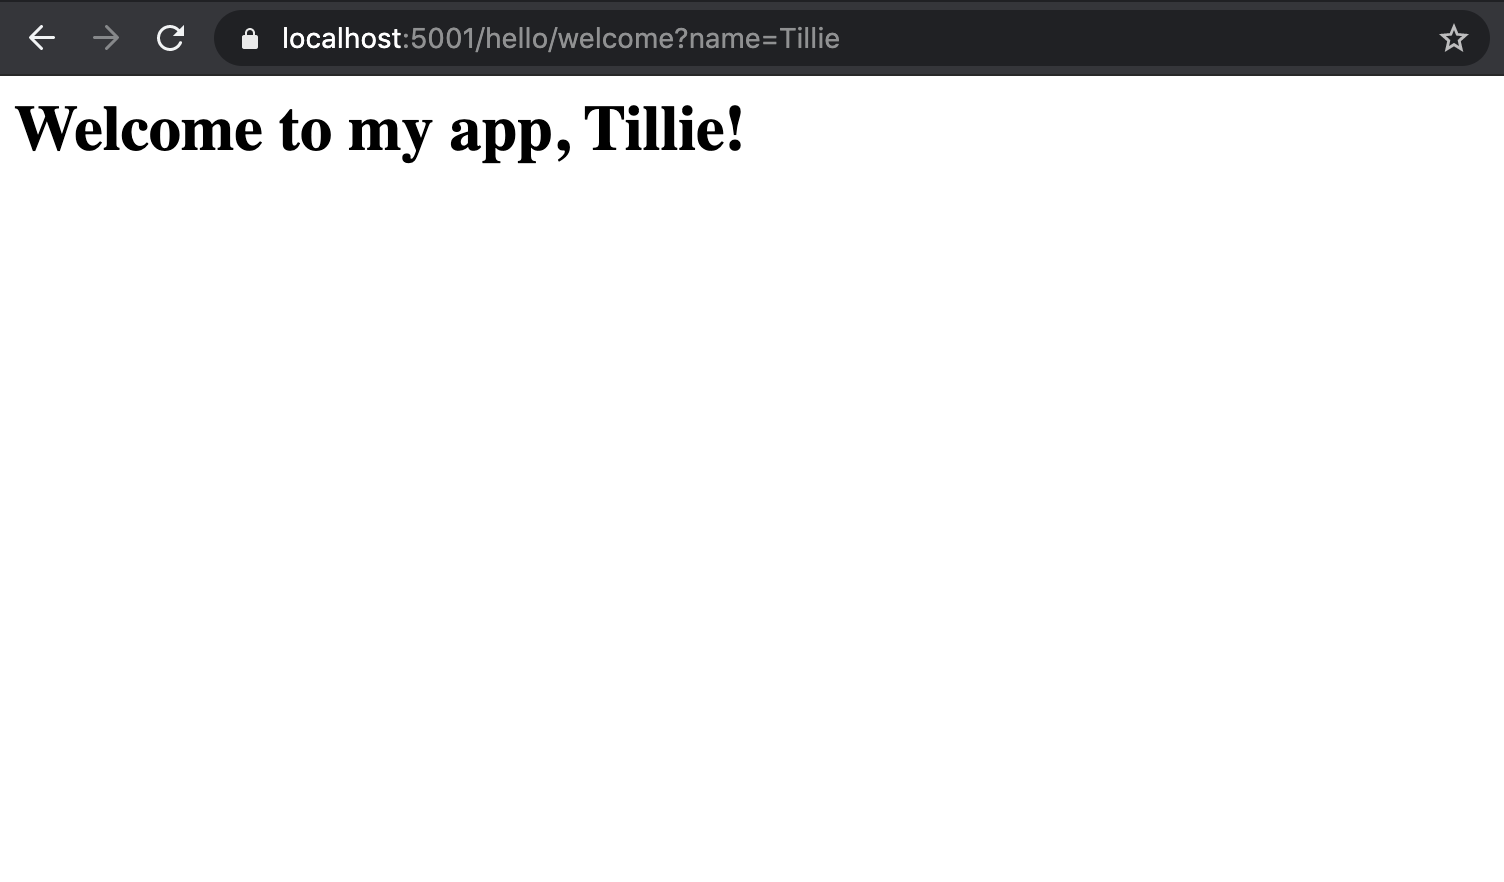 Simple webpage that displays welcome to my app Tillie